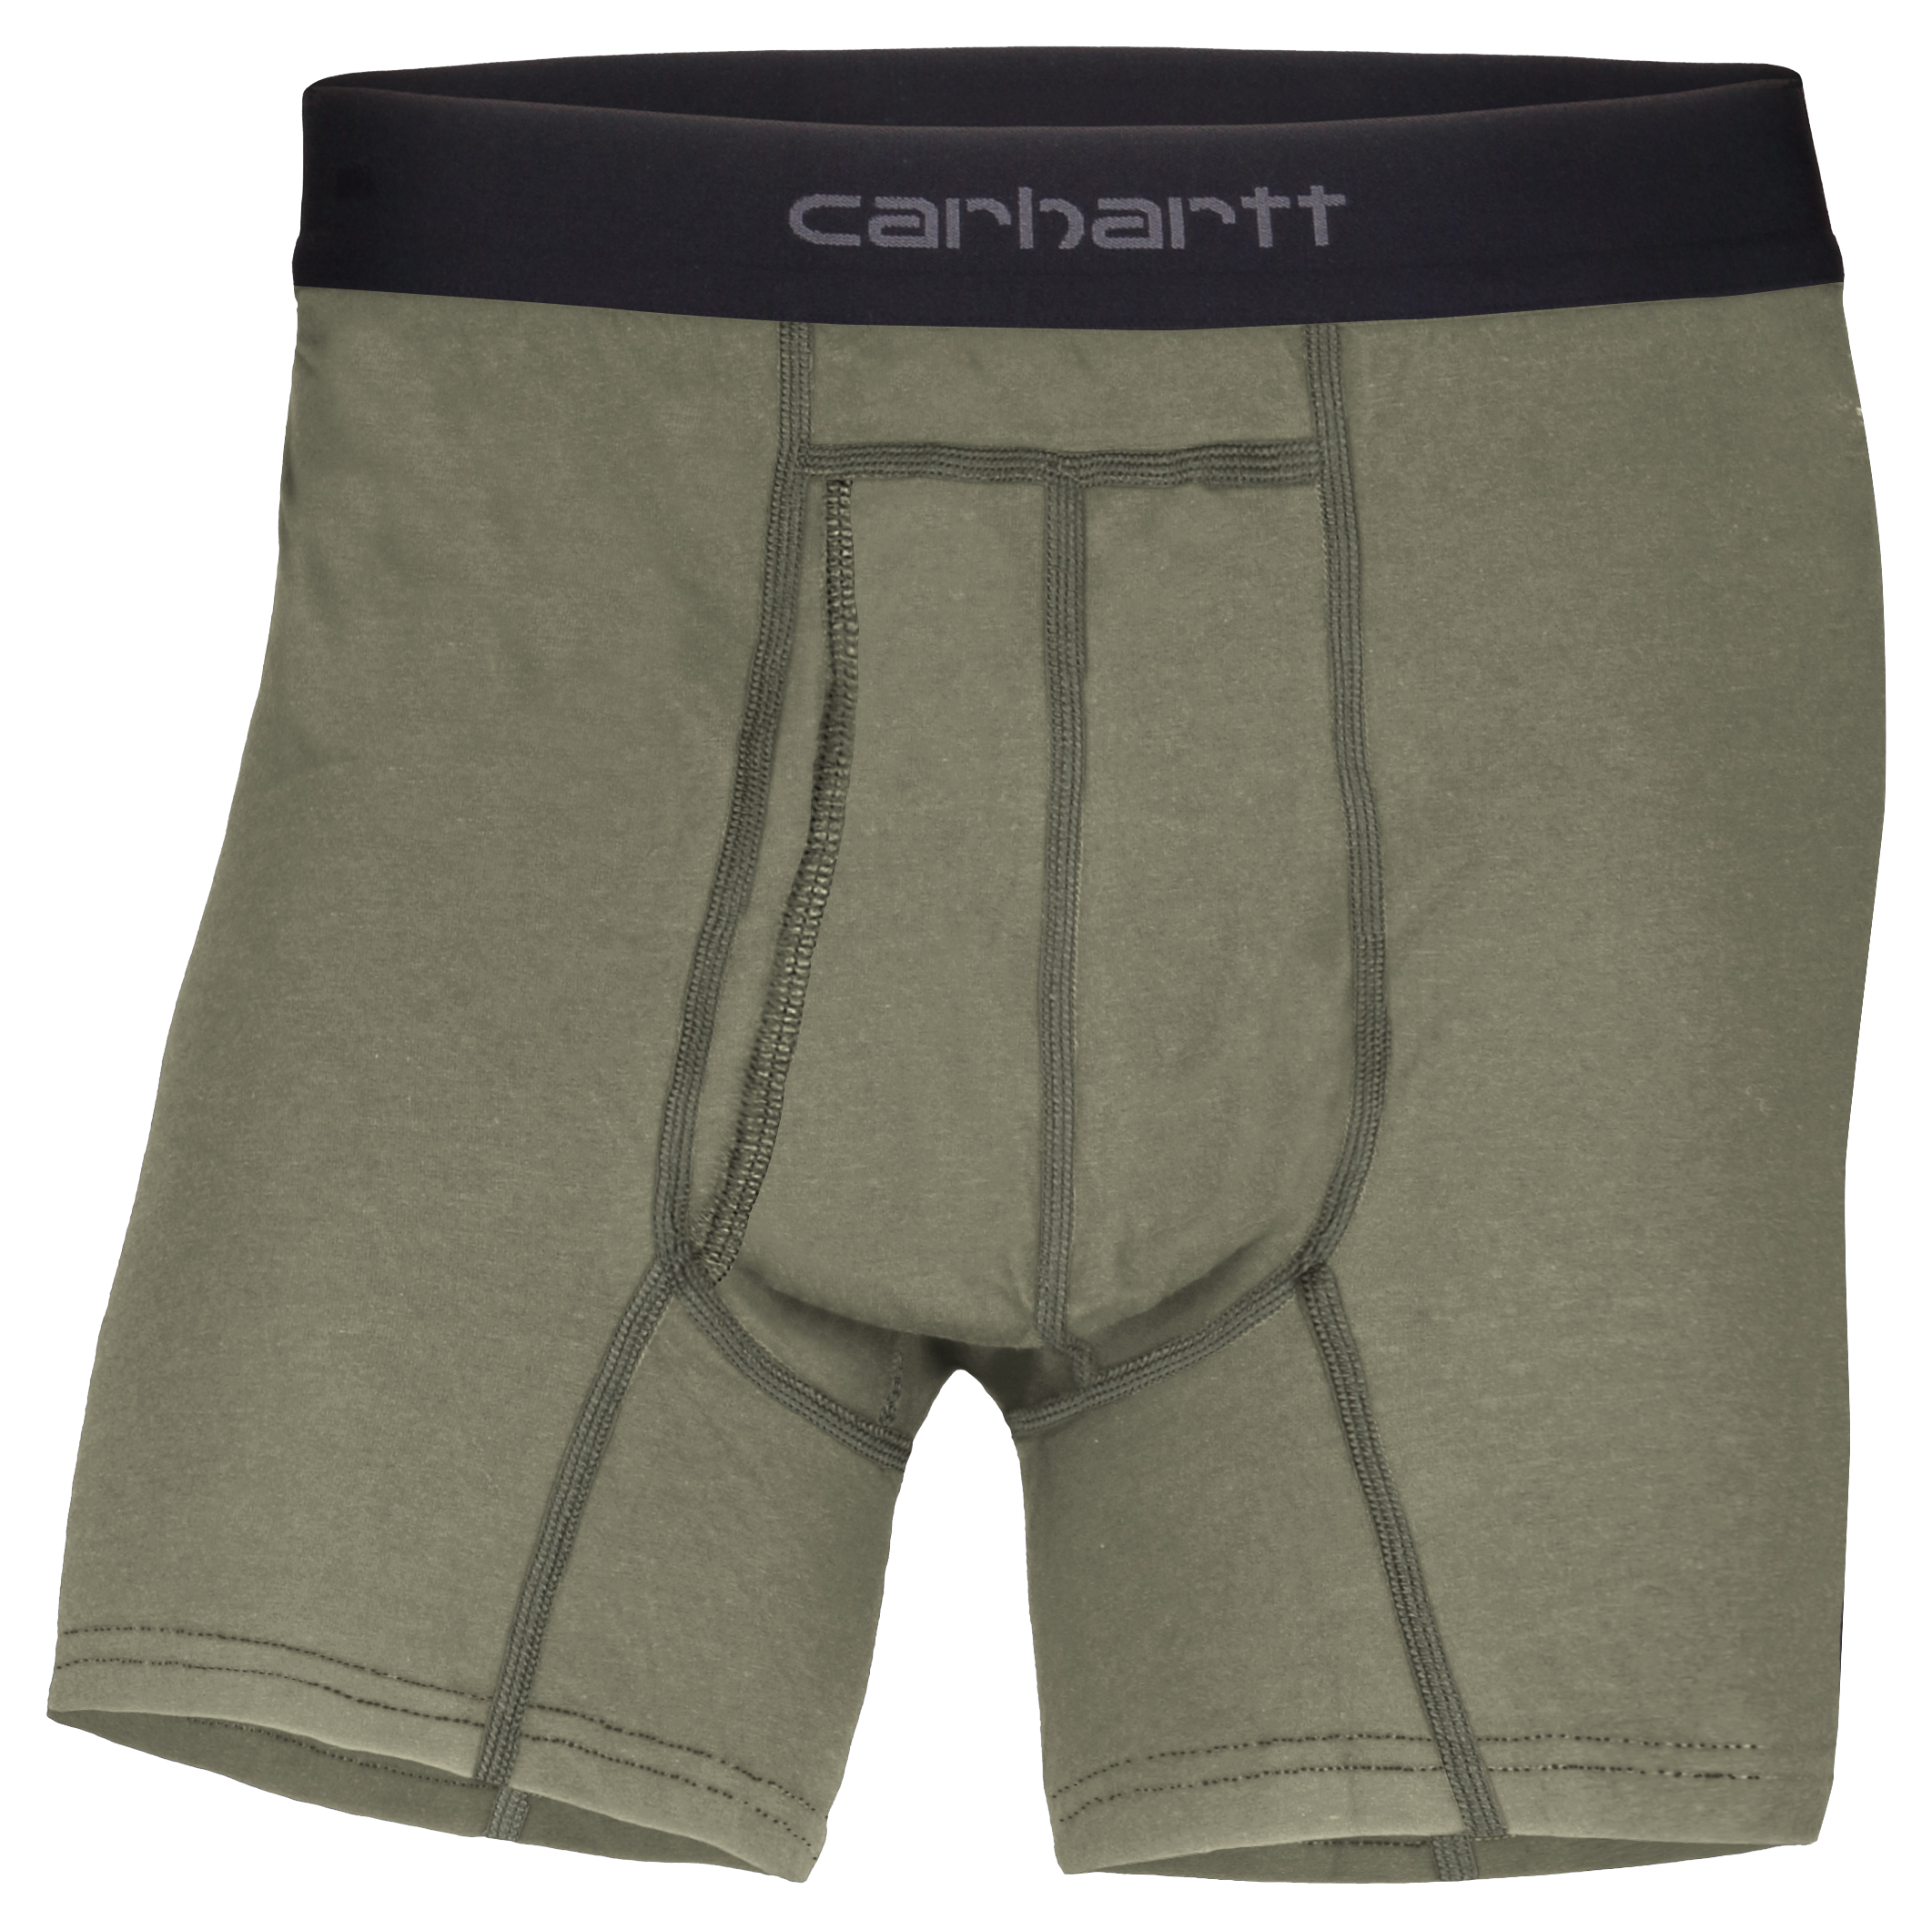 Carhartt Underwear for Men, Online Sale up to 60% off